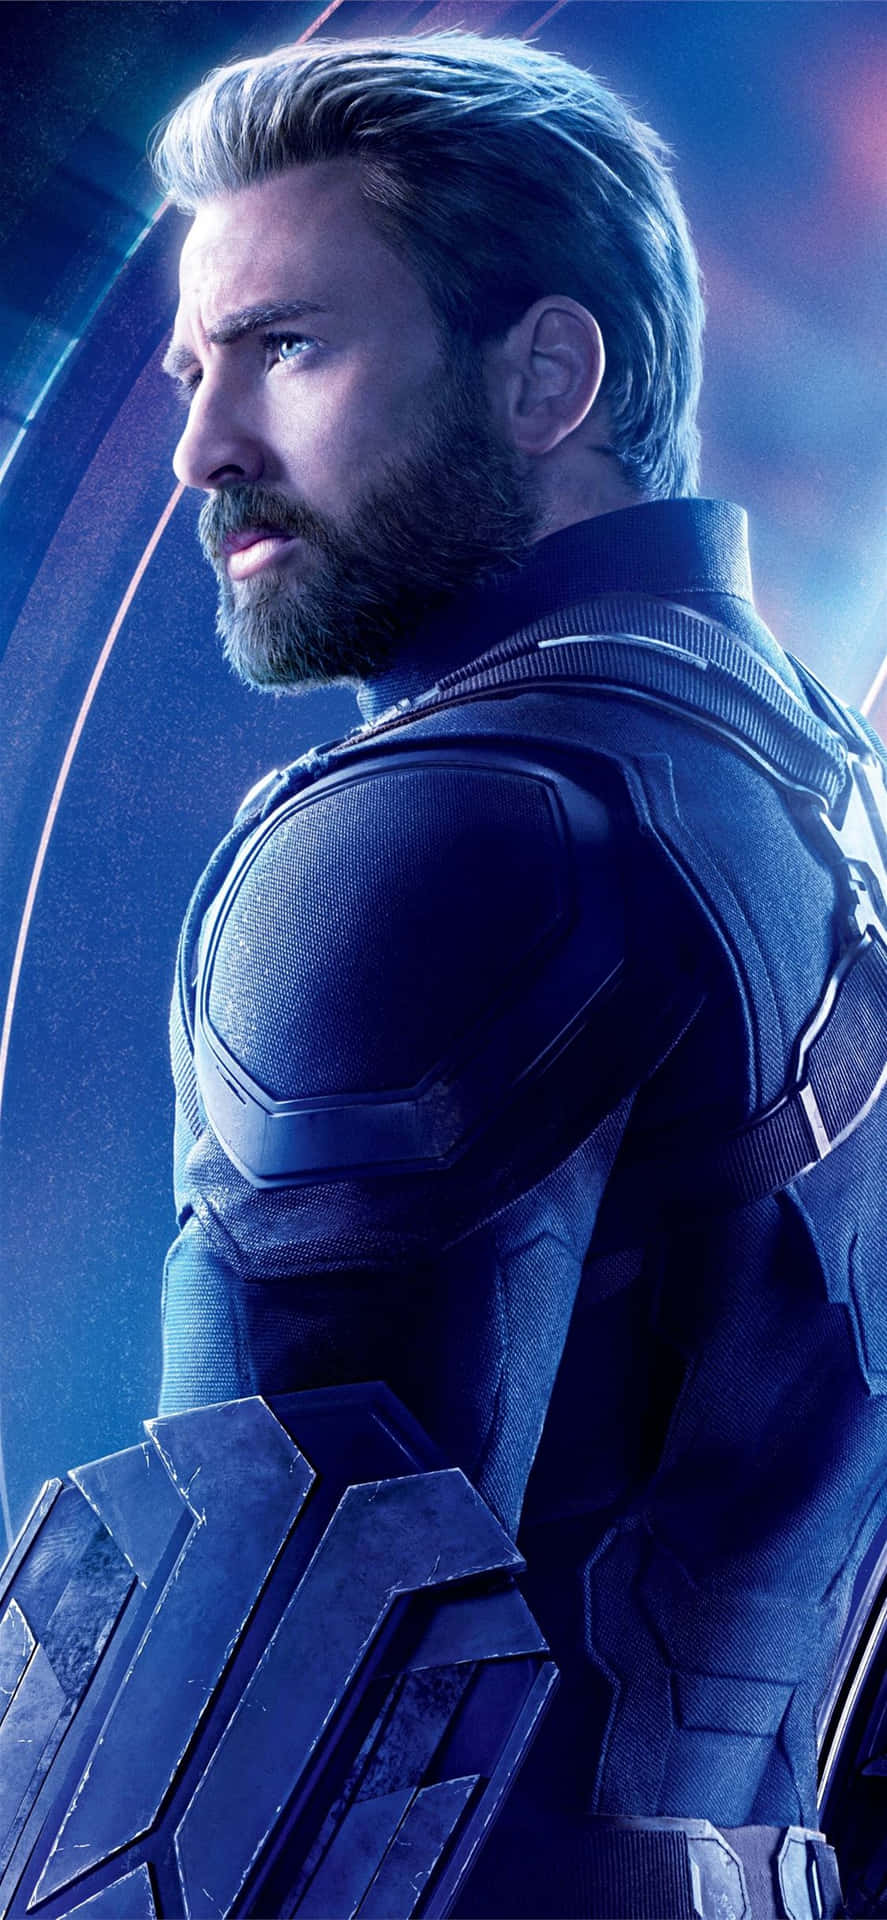 Fondode Pantalla De Android De Captain America, El Superhéroe.